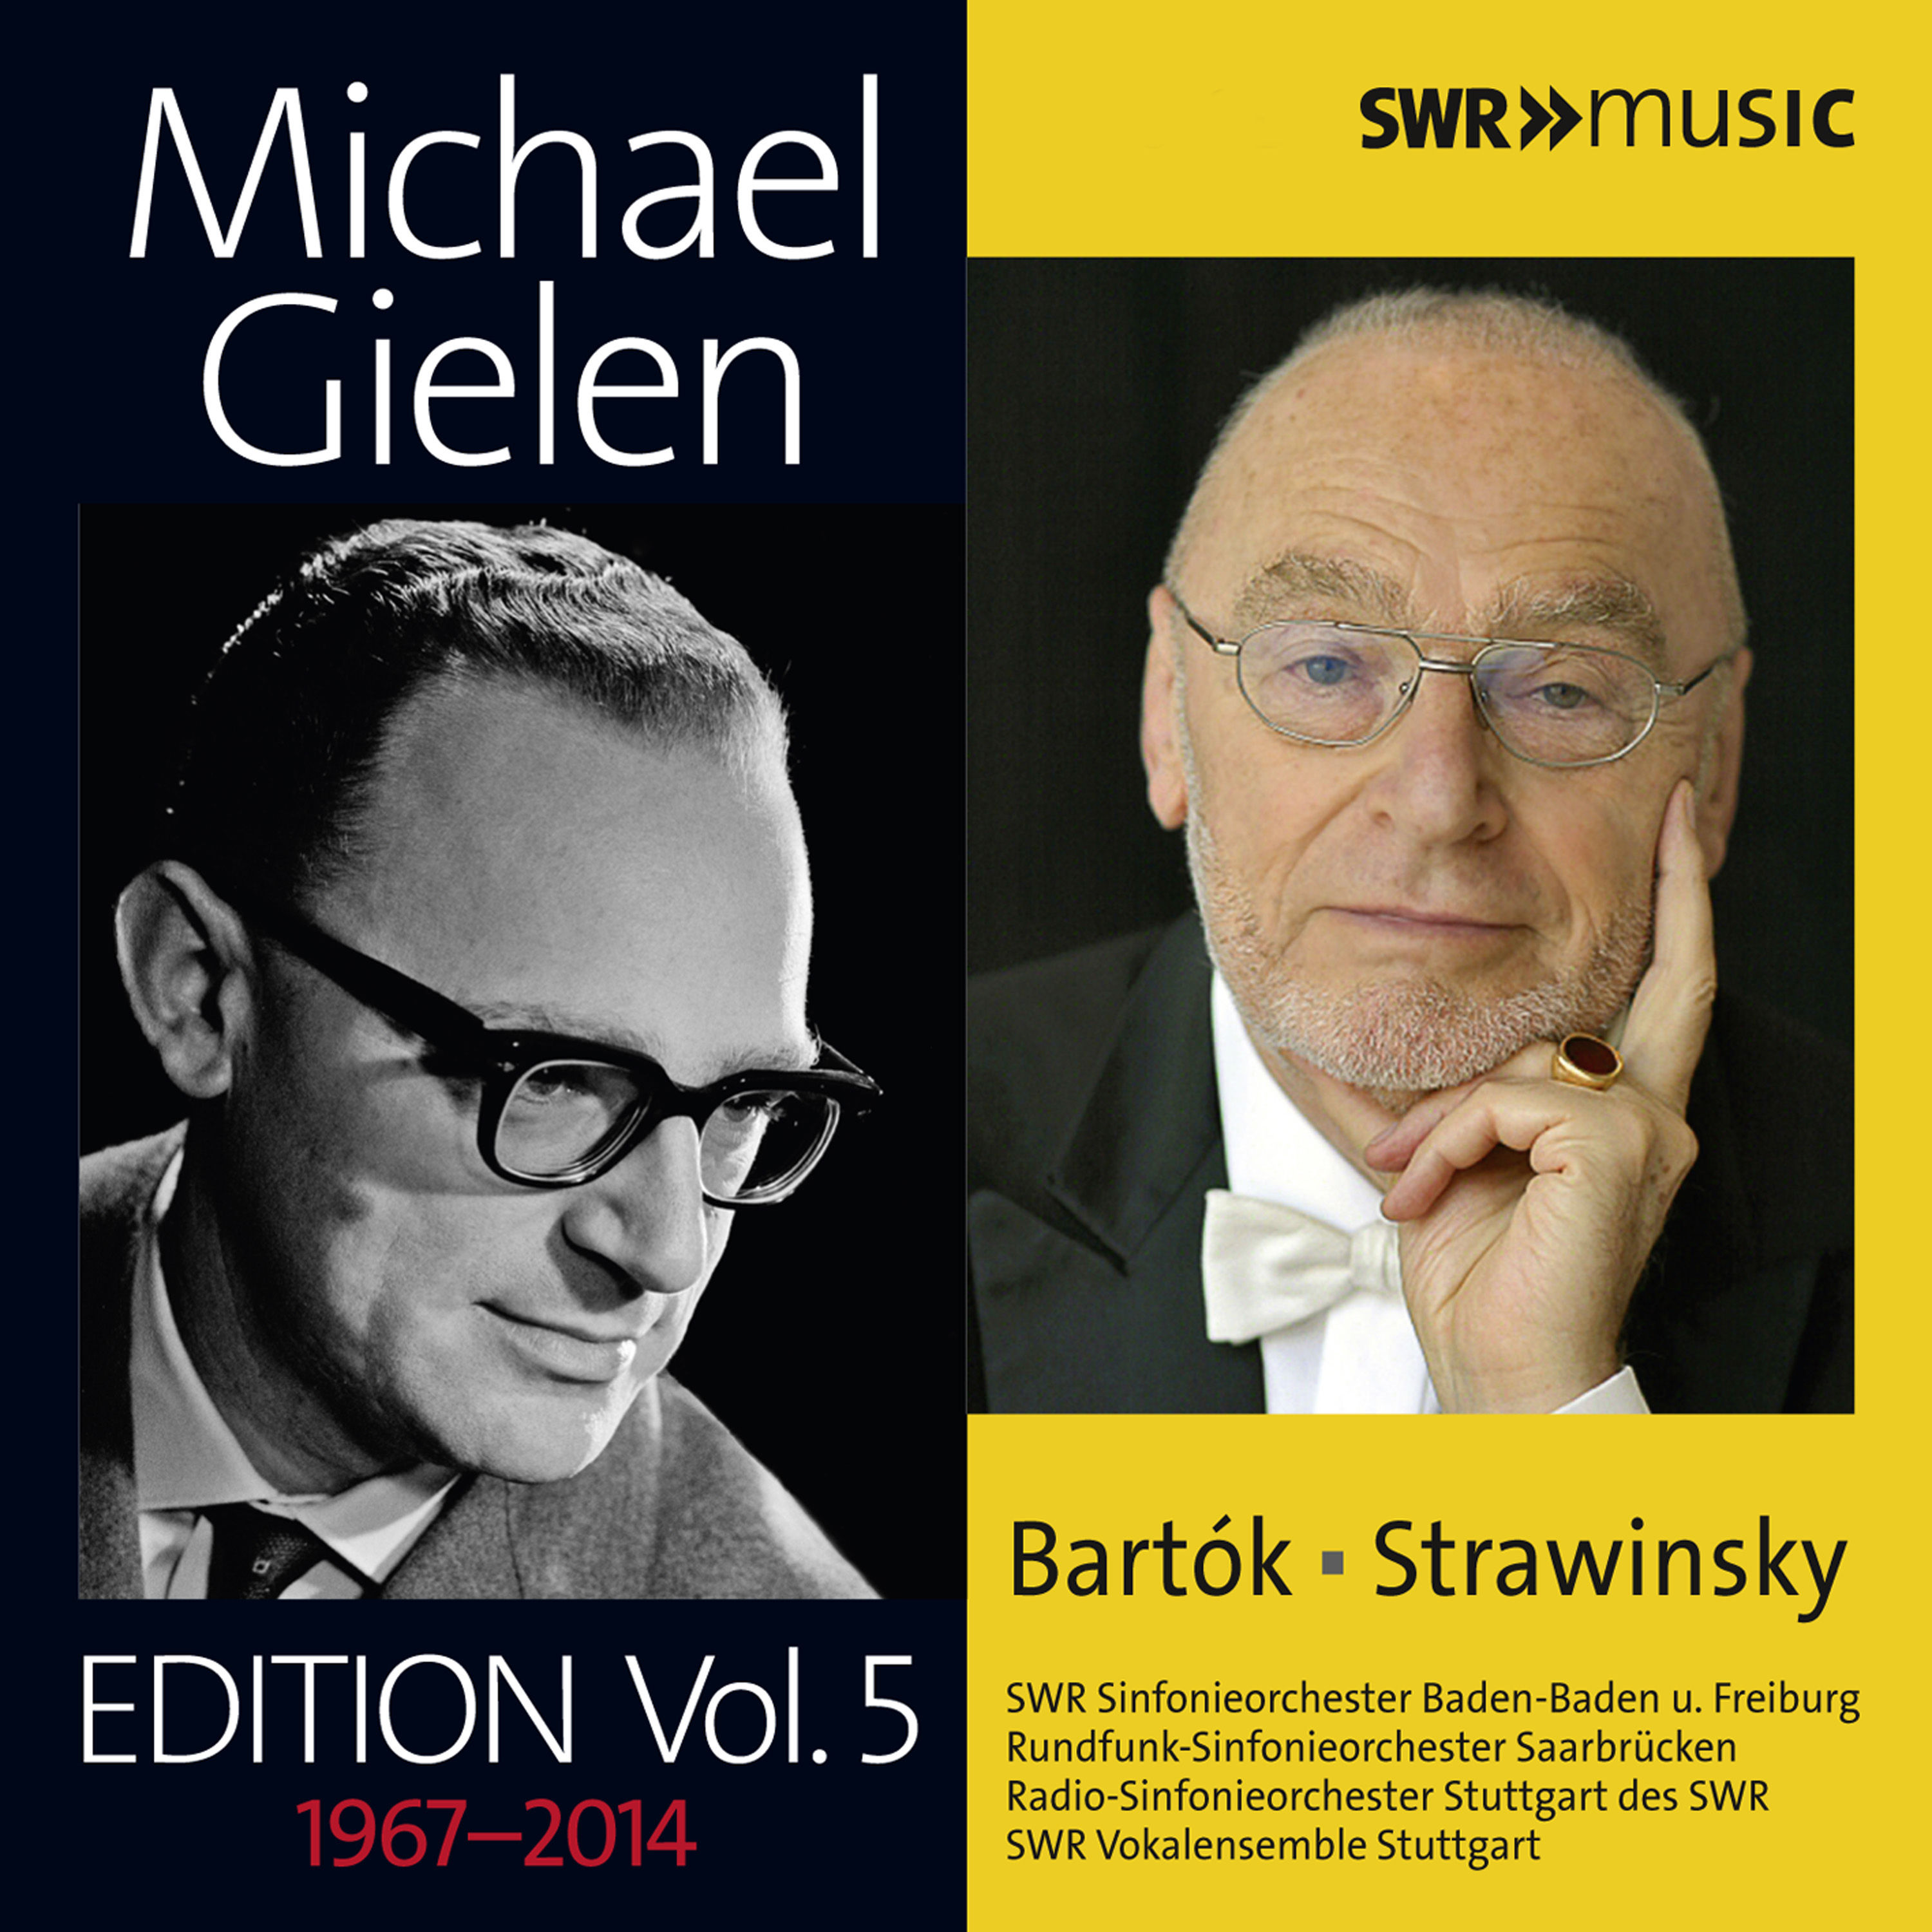 SWR Sinfonieorchester - Michael Gielen Edition Vol. 5 cd05 Bartok Strawinsky